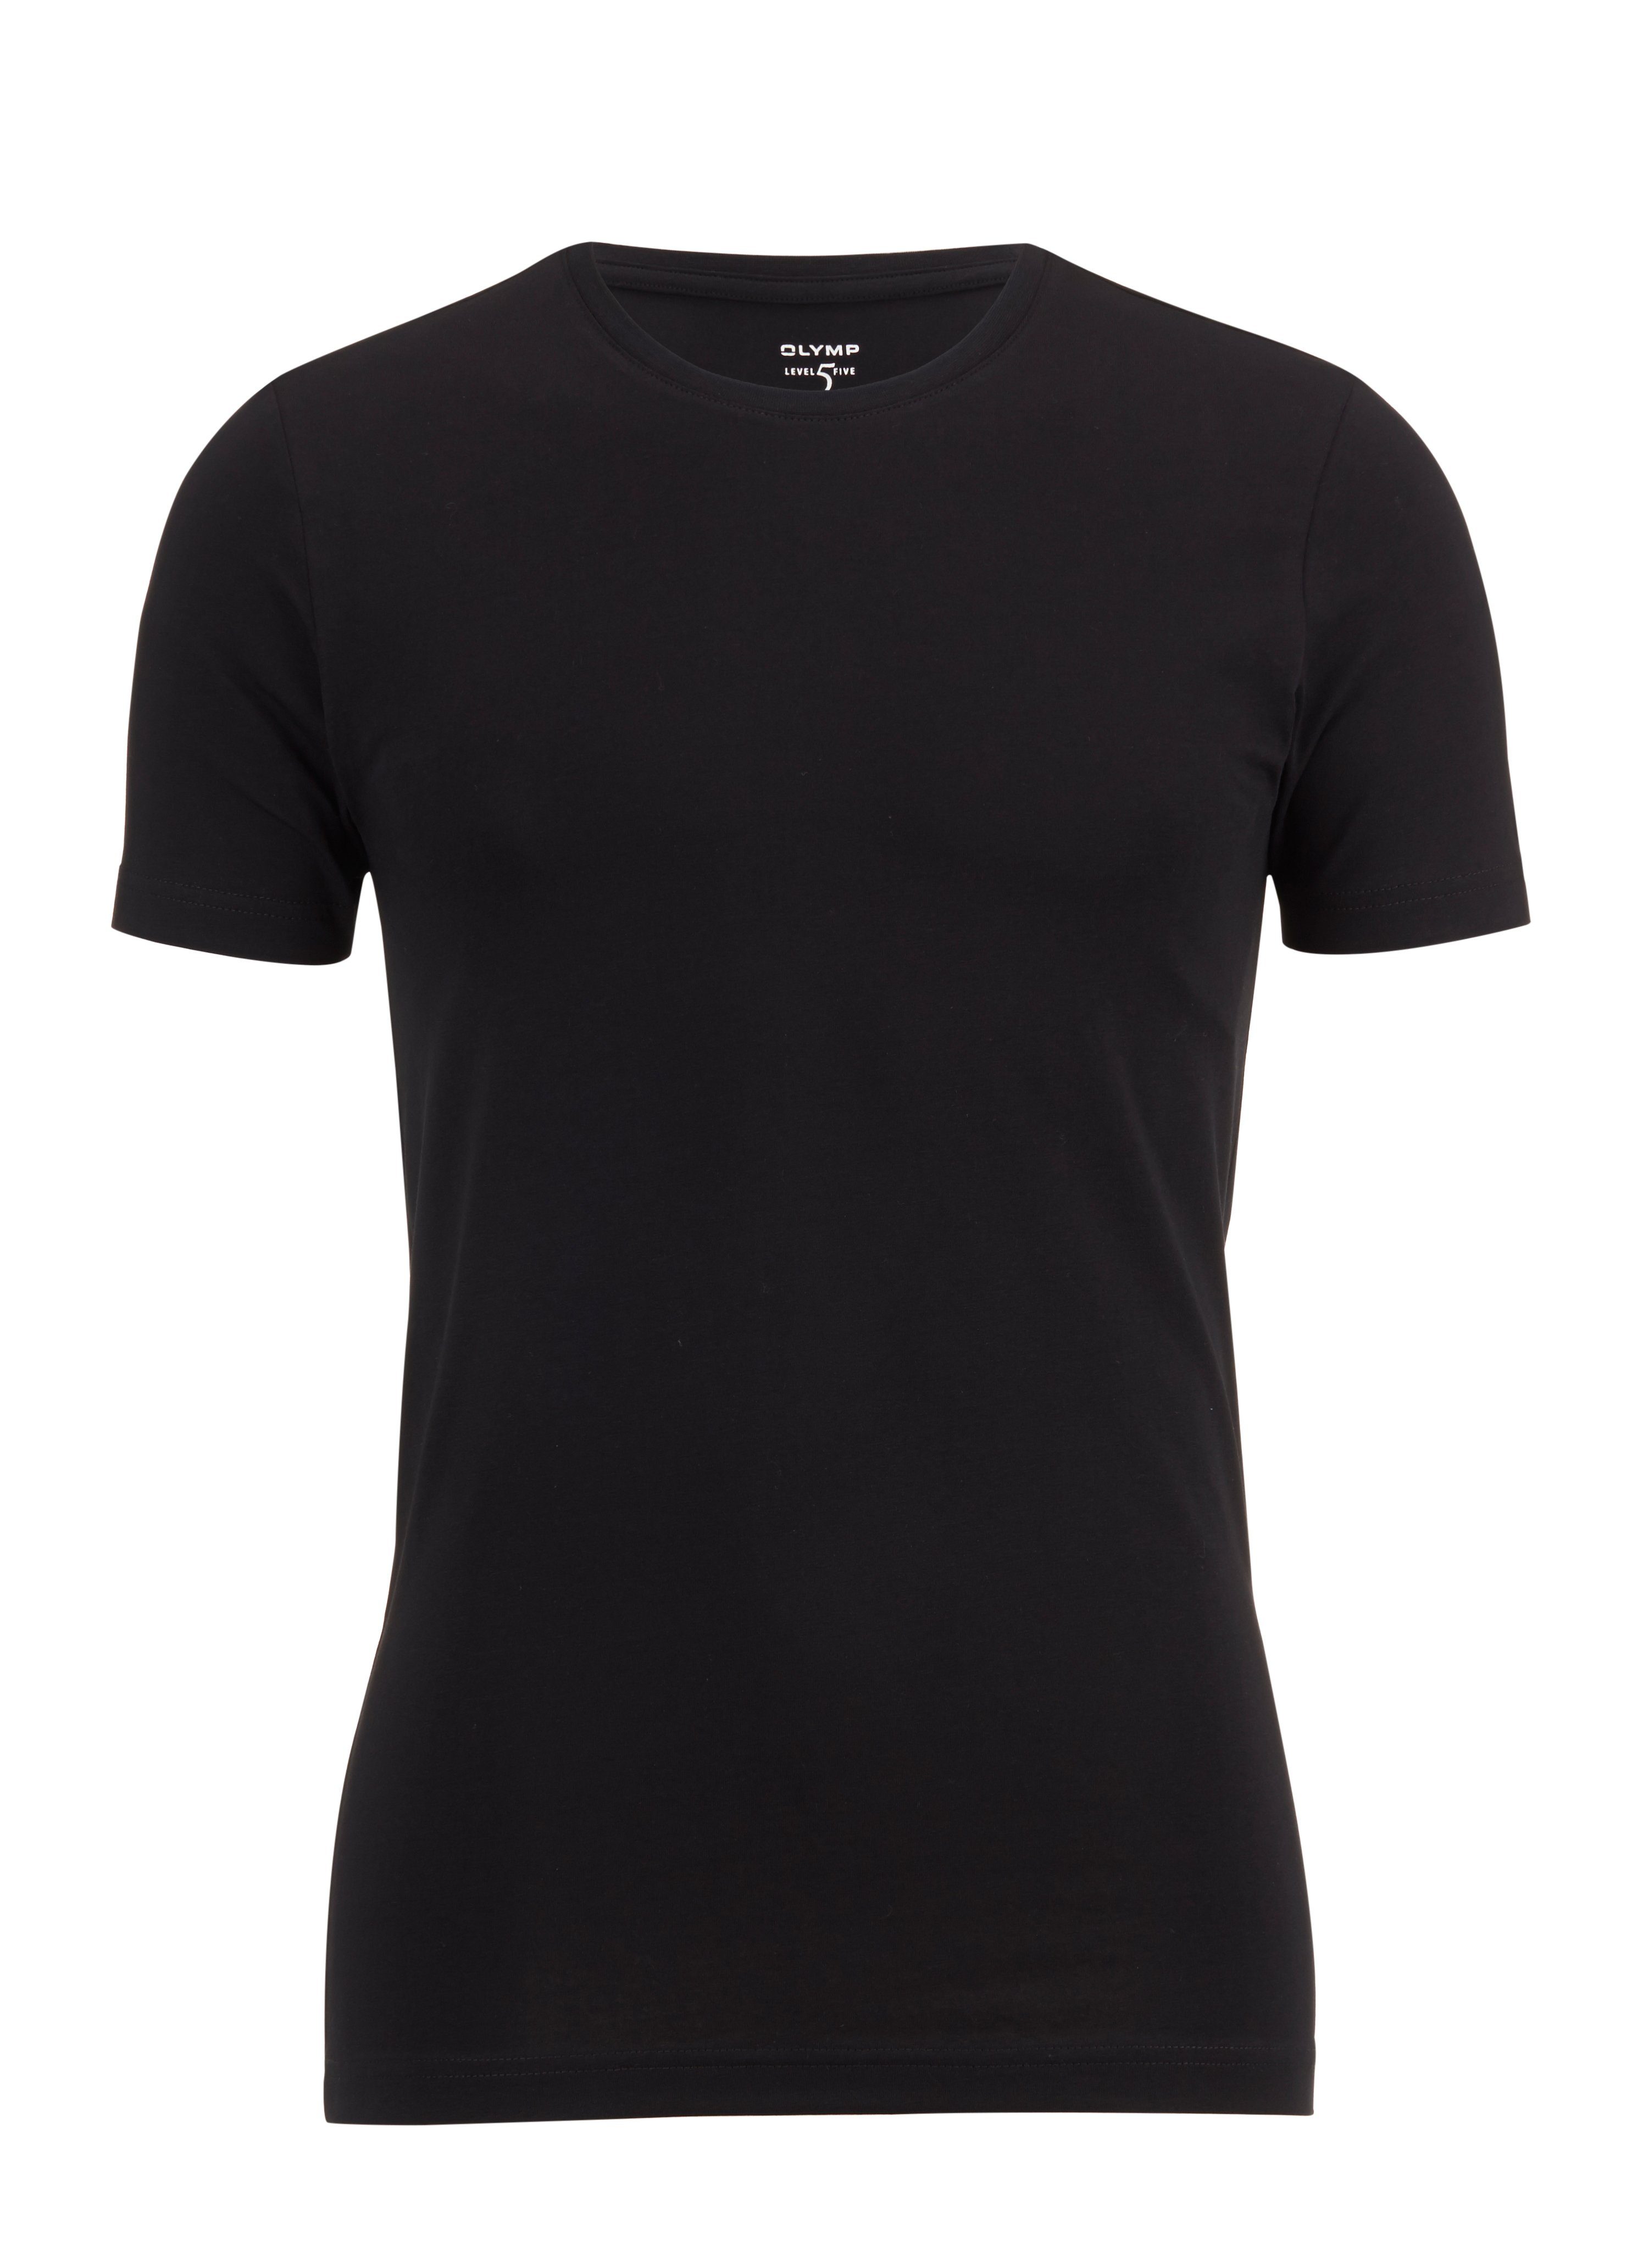 T-Shirt fit Level body OLYMP schwarz 5